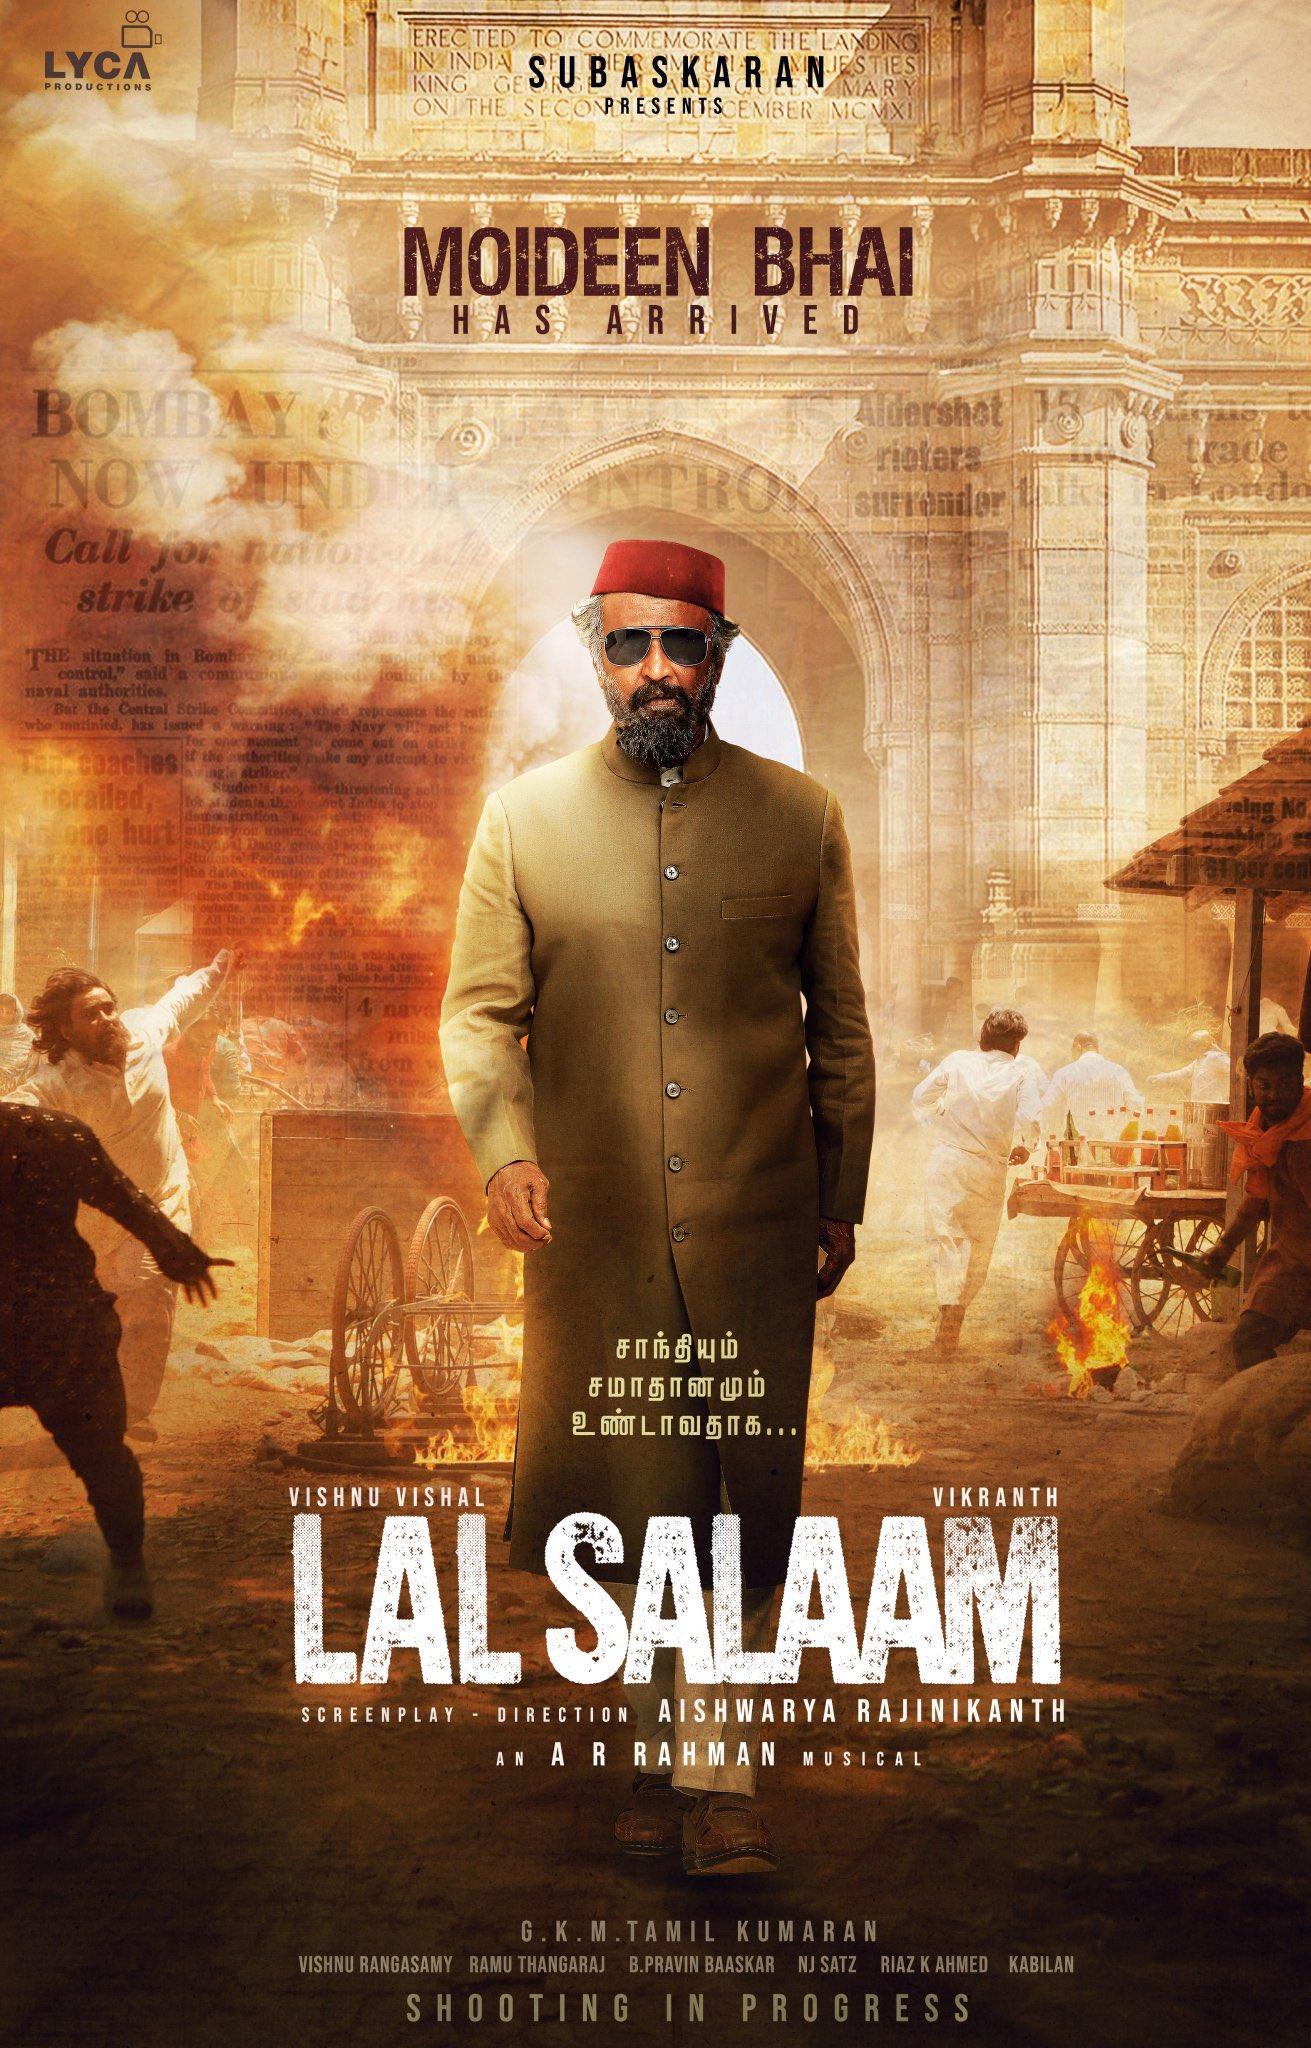 Lal Salaam (February 9) - In TheatresDirected by Aishwarya Rajinikanth, 